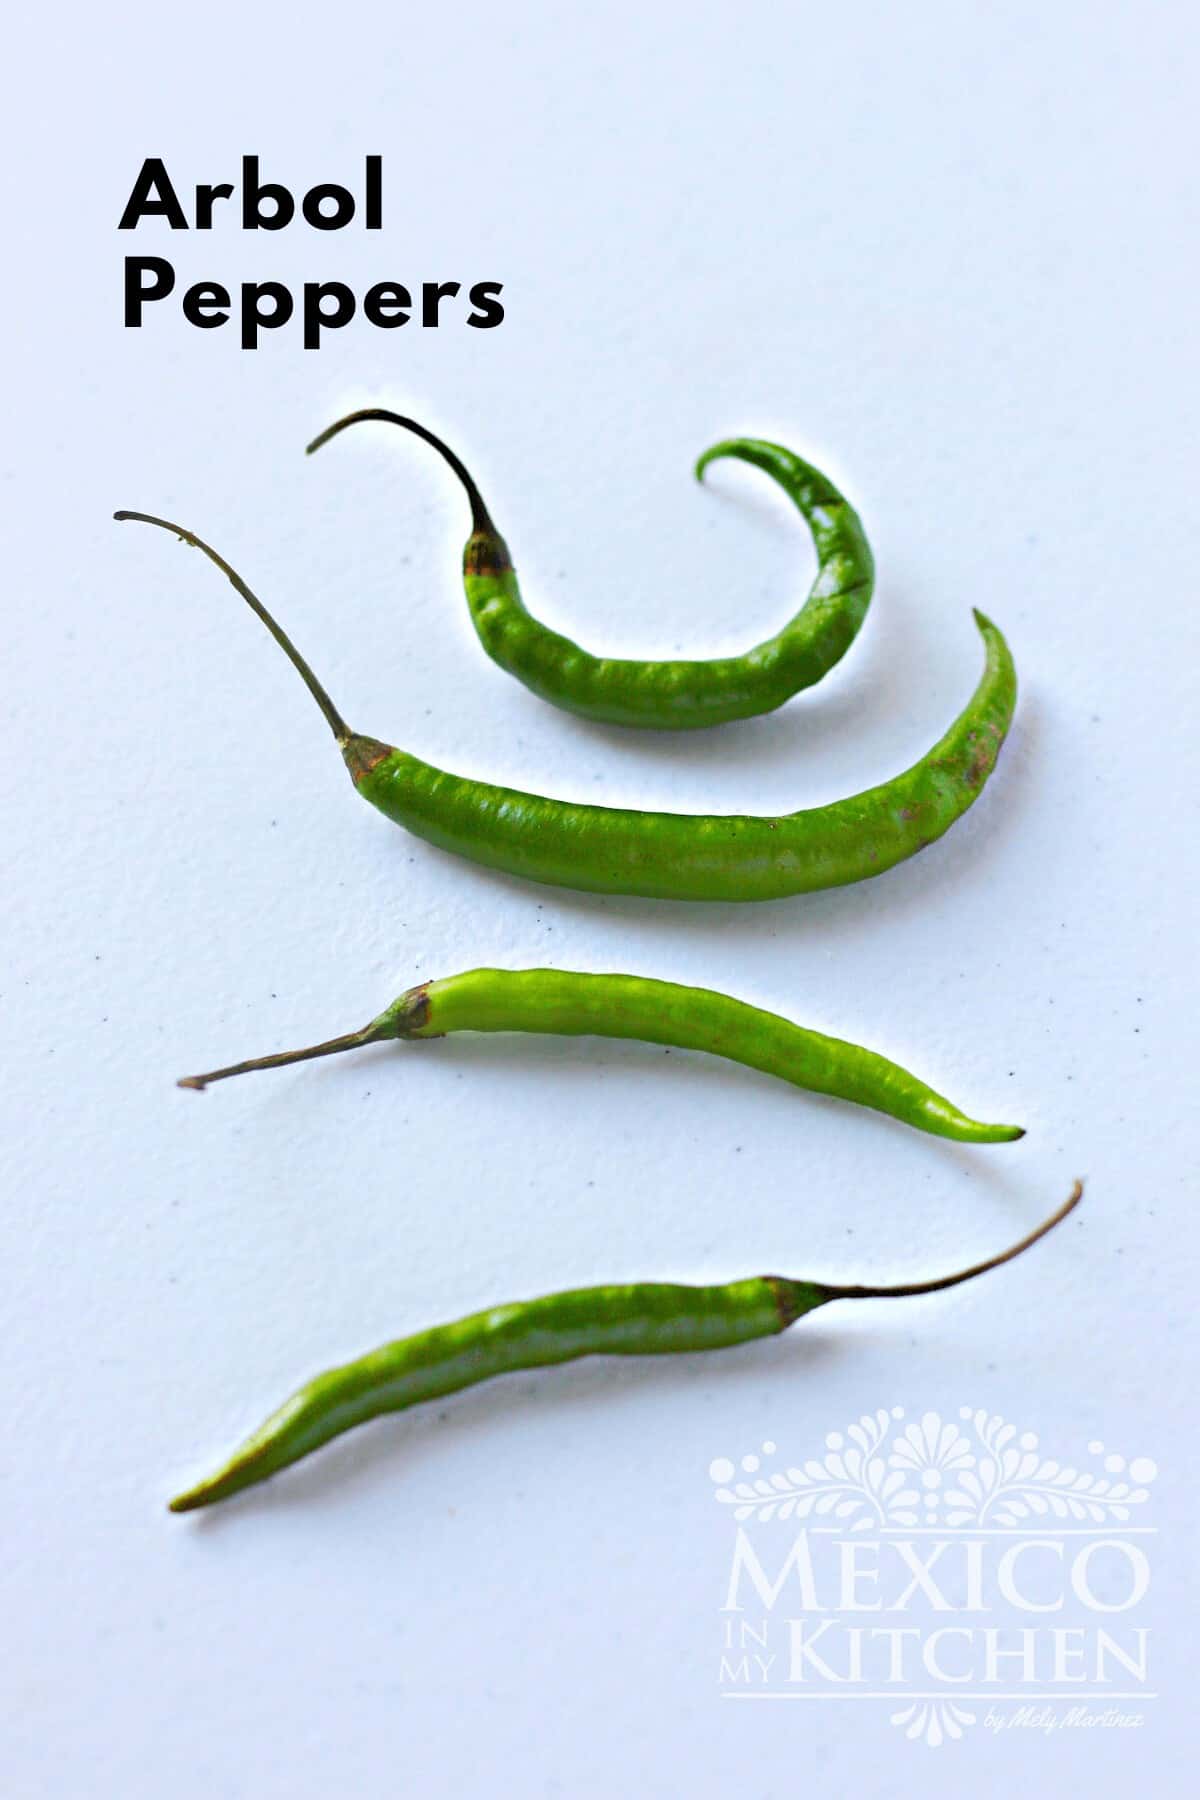 Arbol peppers